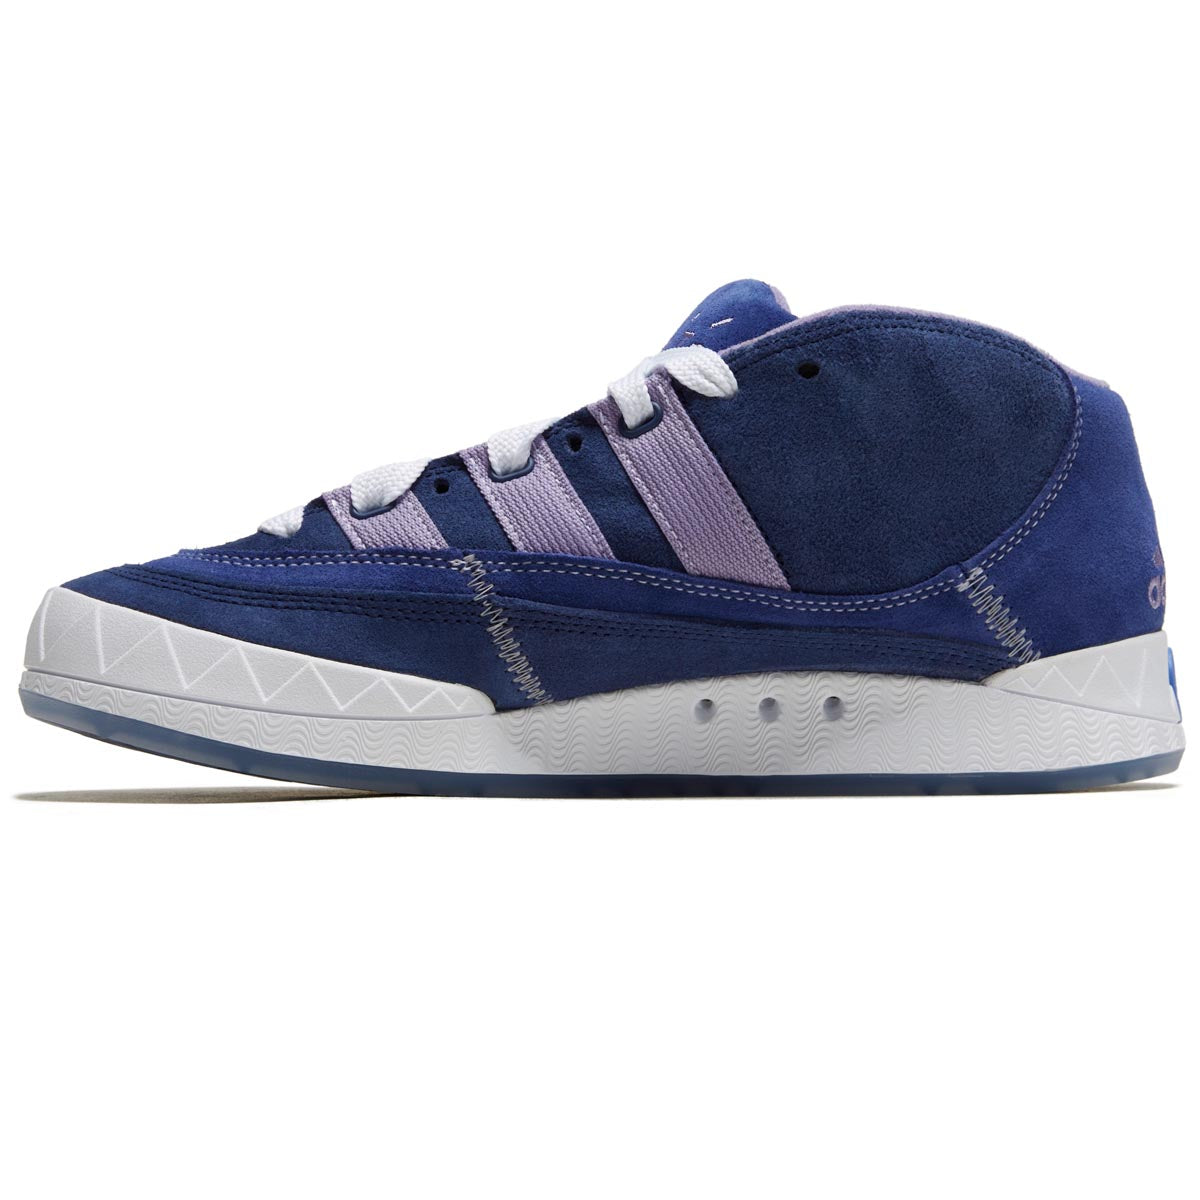 Adidas Adimatic Mid x Maite Shoes - Victory Blue/Magic Lilac/Dark Blue image 2